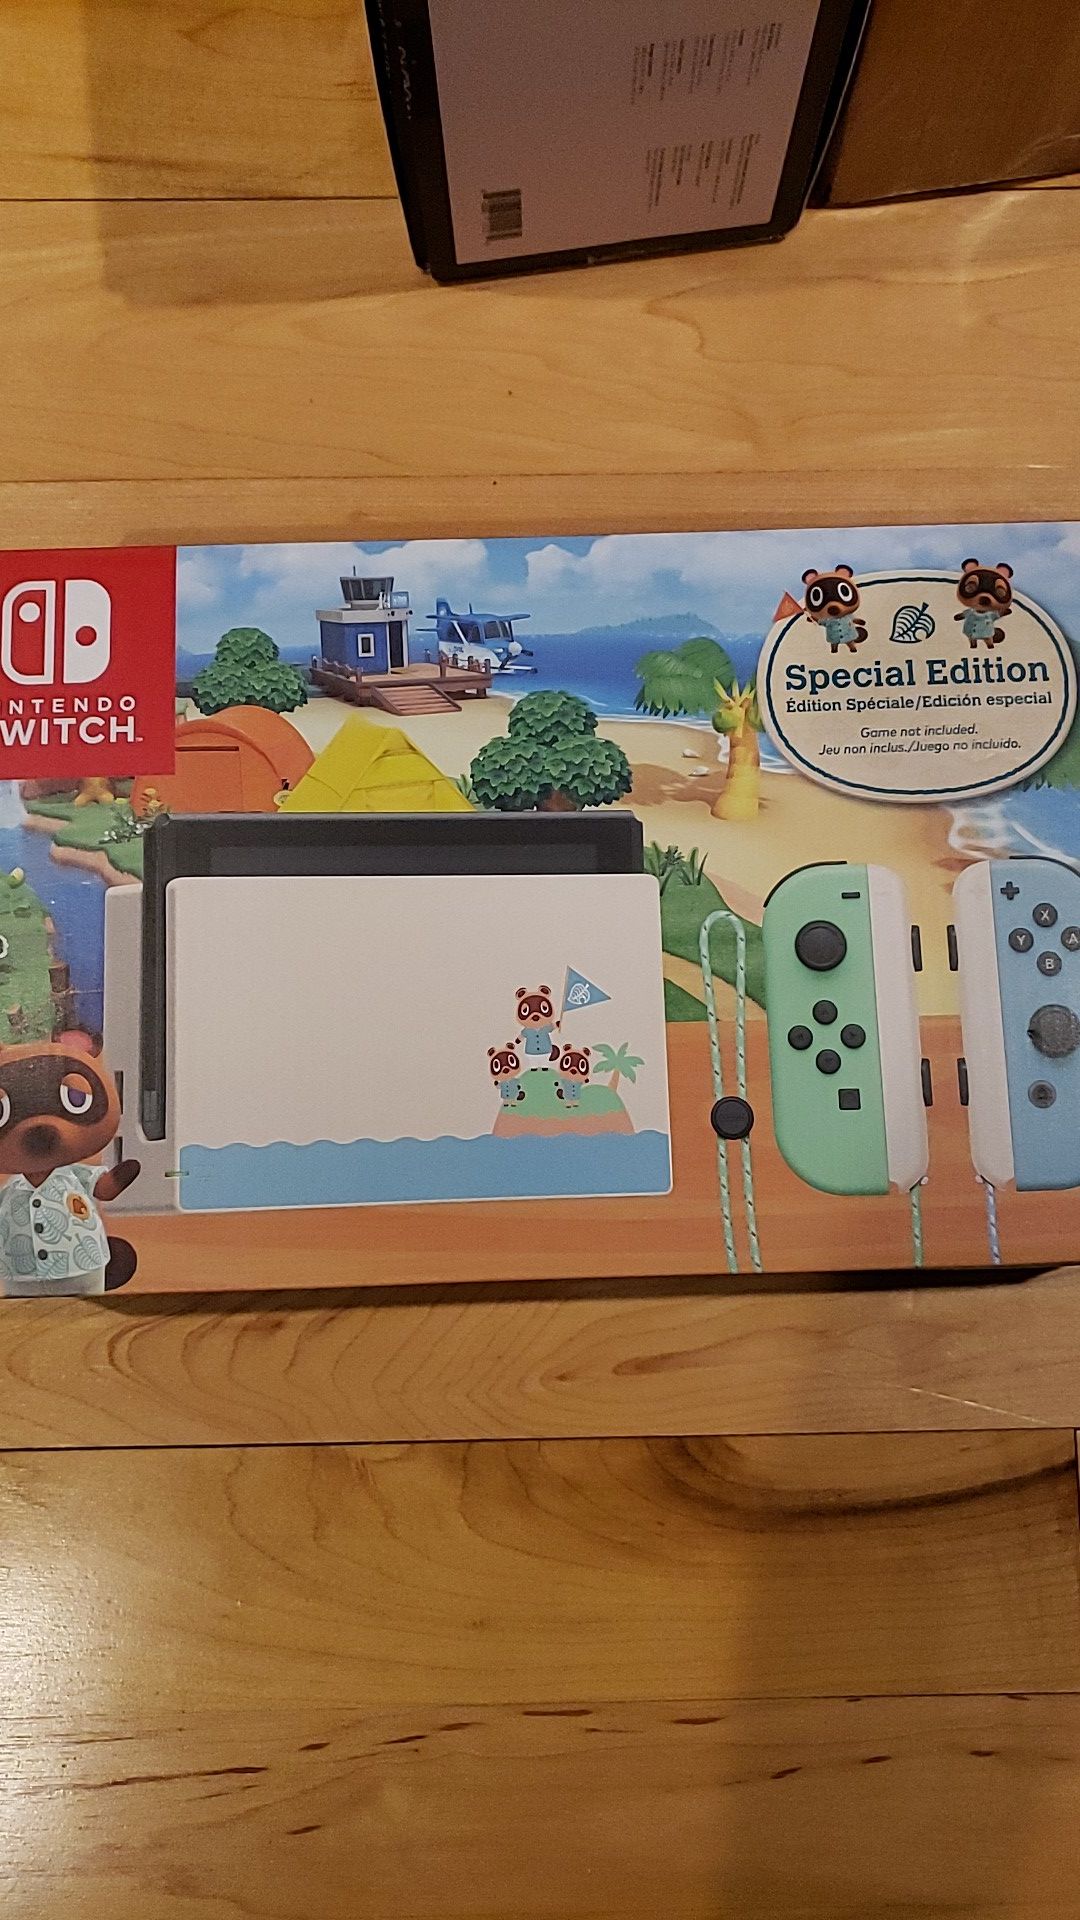 Nintendo Switch - Animal Crossing Edition